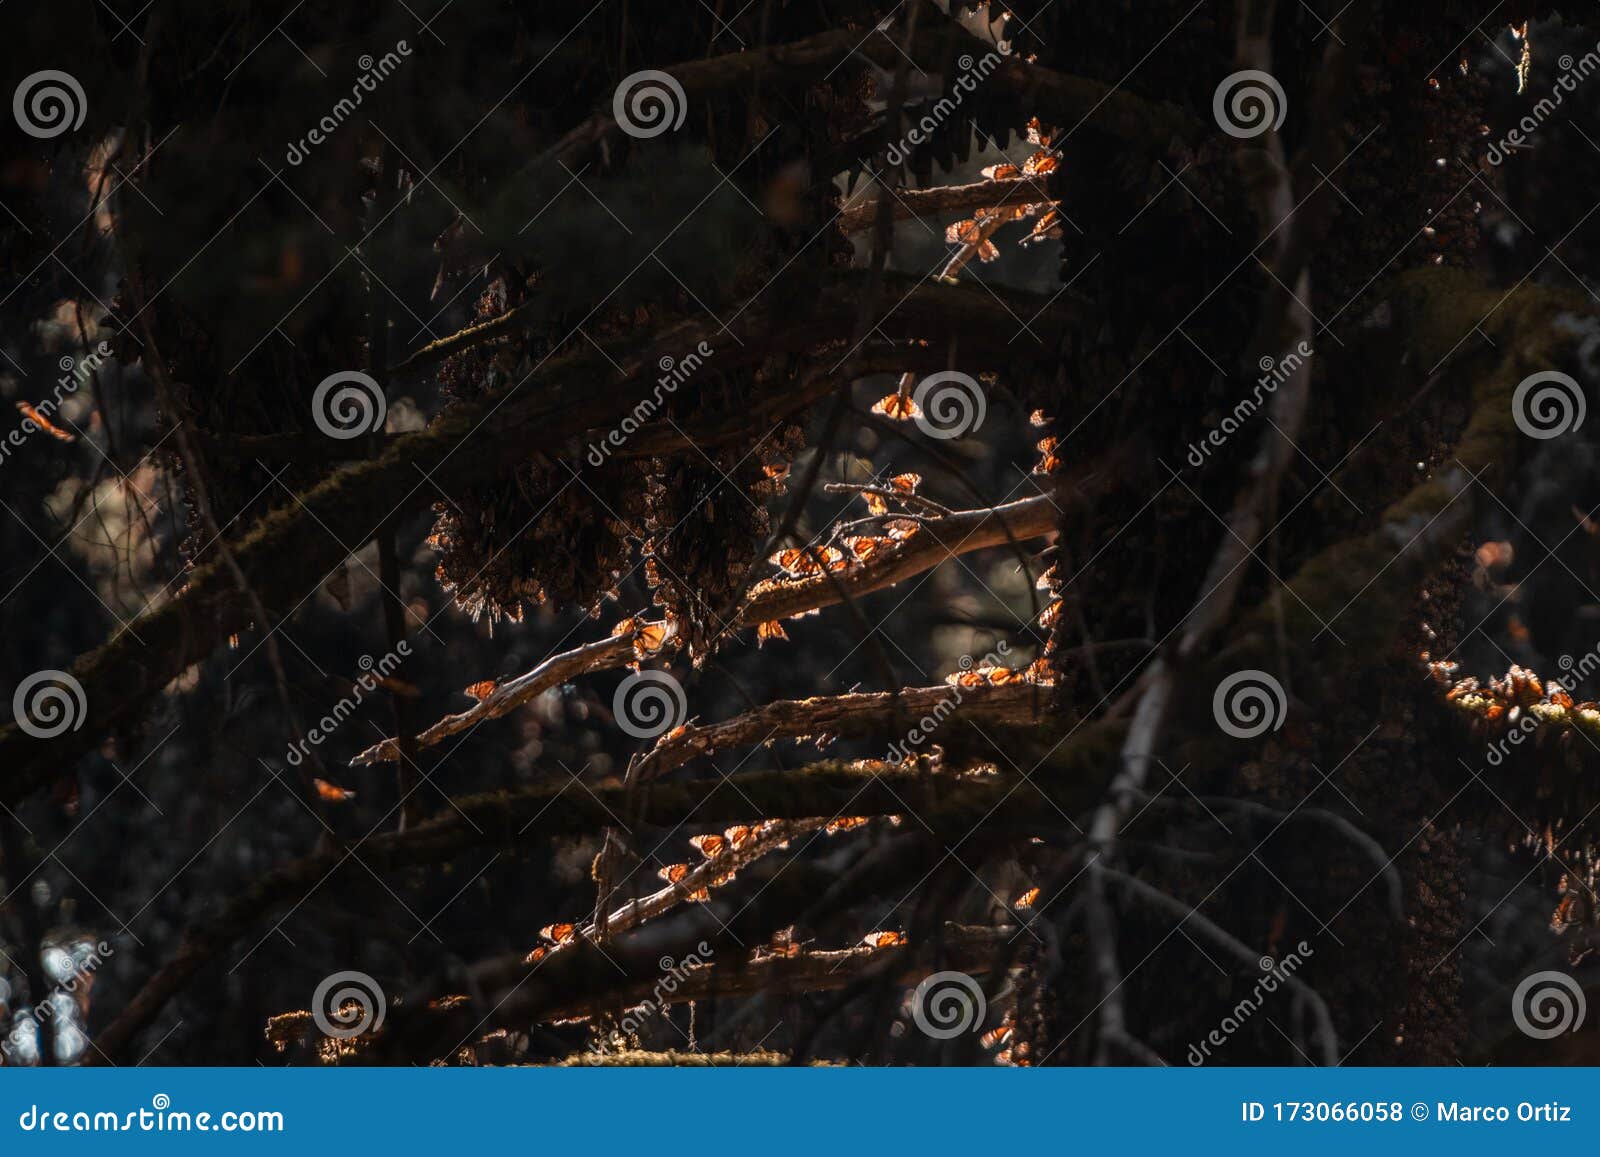 detail of a group of monarch butterflies danaus plexippus resting on a pine branch